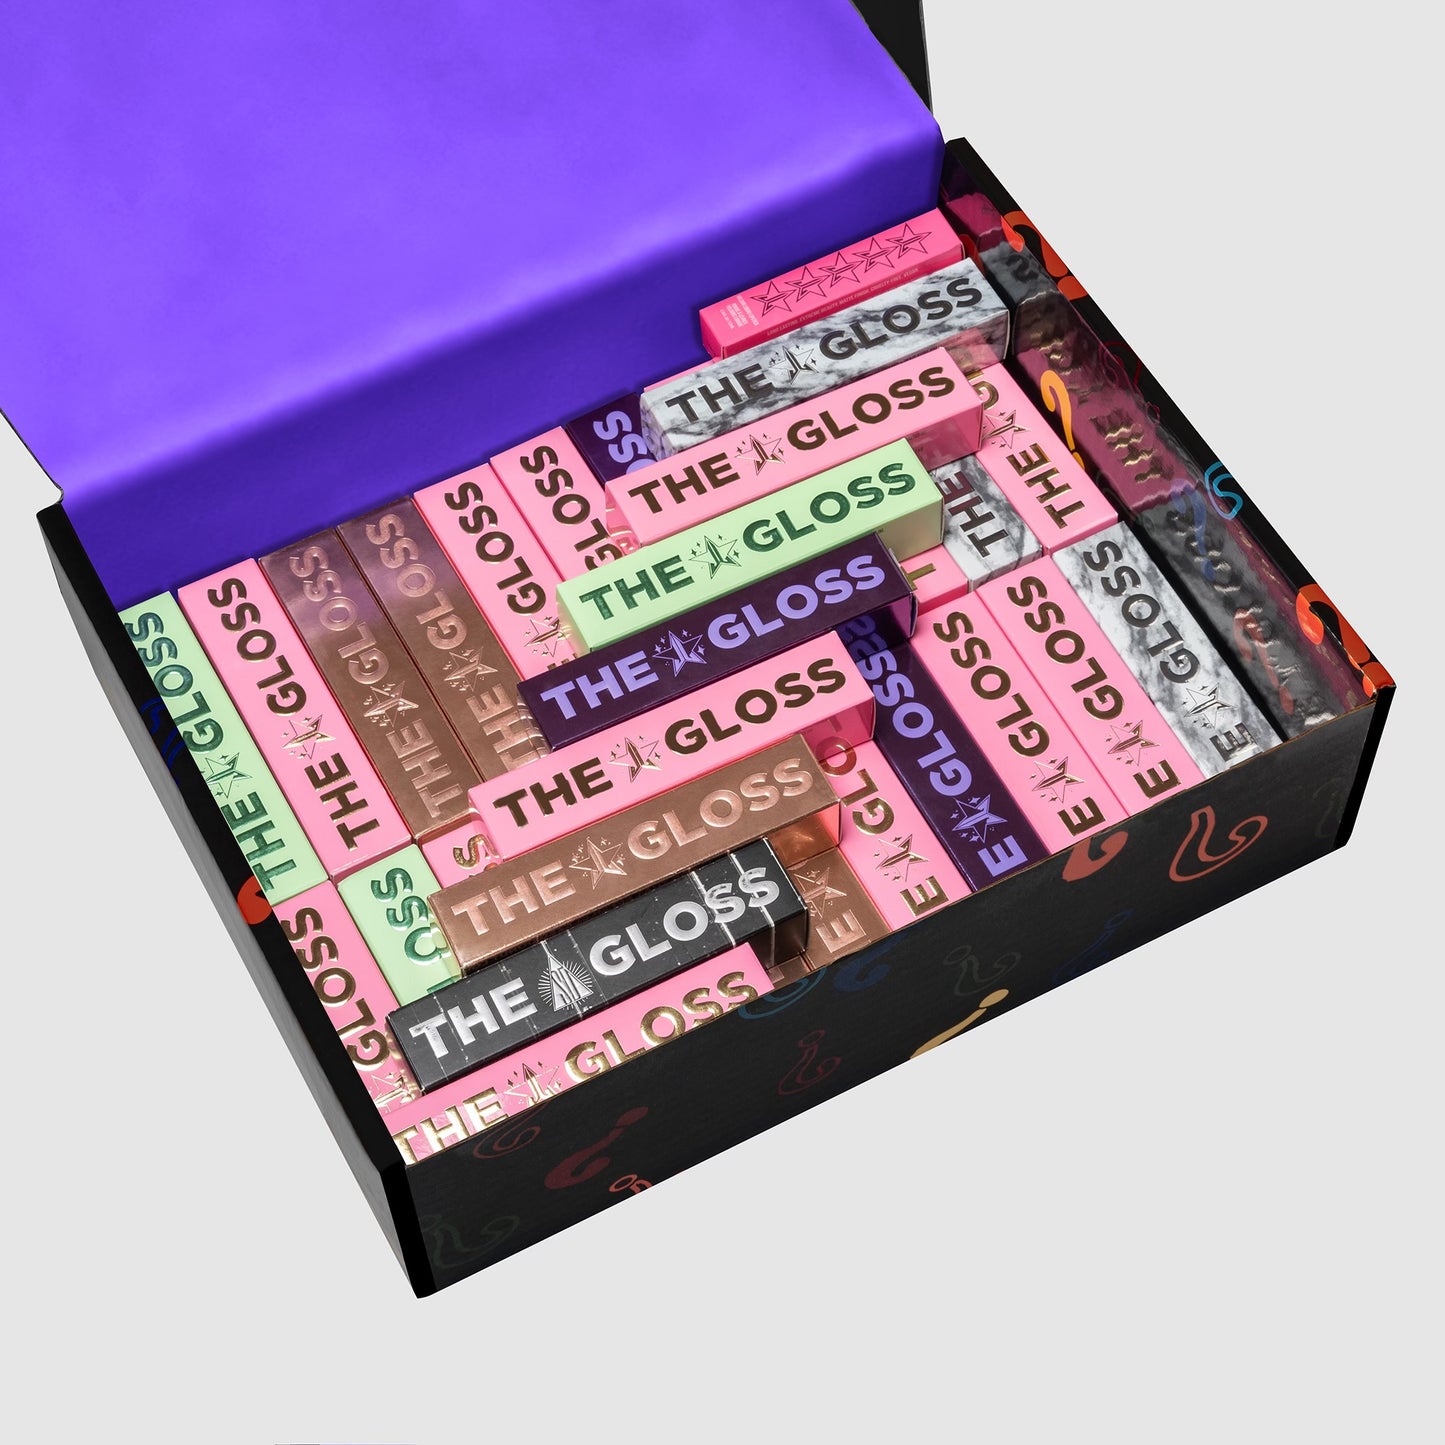 Jeffree Star Cosmetics High Glossy The Gloss Lip Gloss LIMITED EDITION Pricing Zoom Birthday Holiday Gift Box (27 pcs)